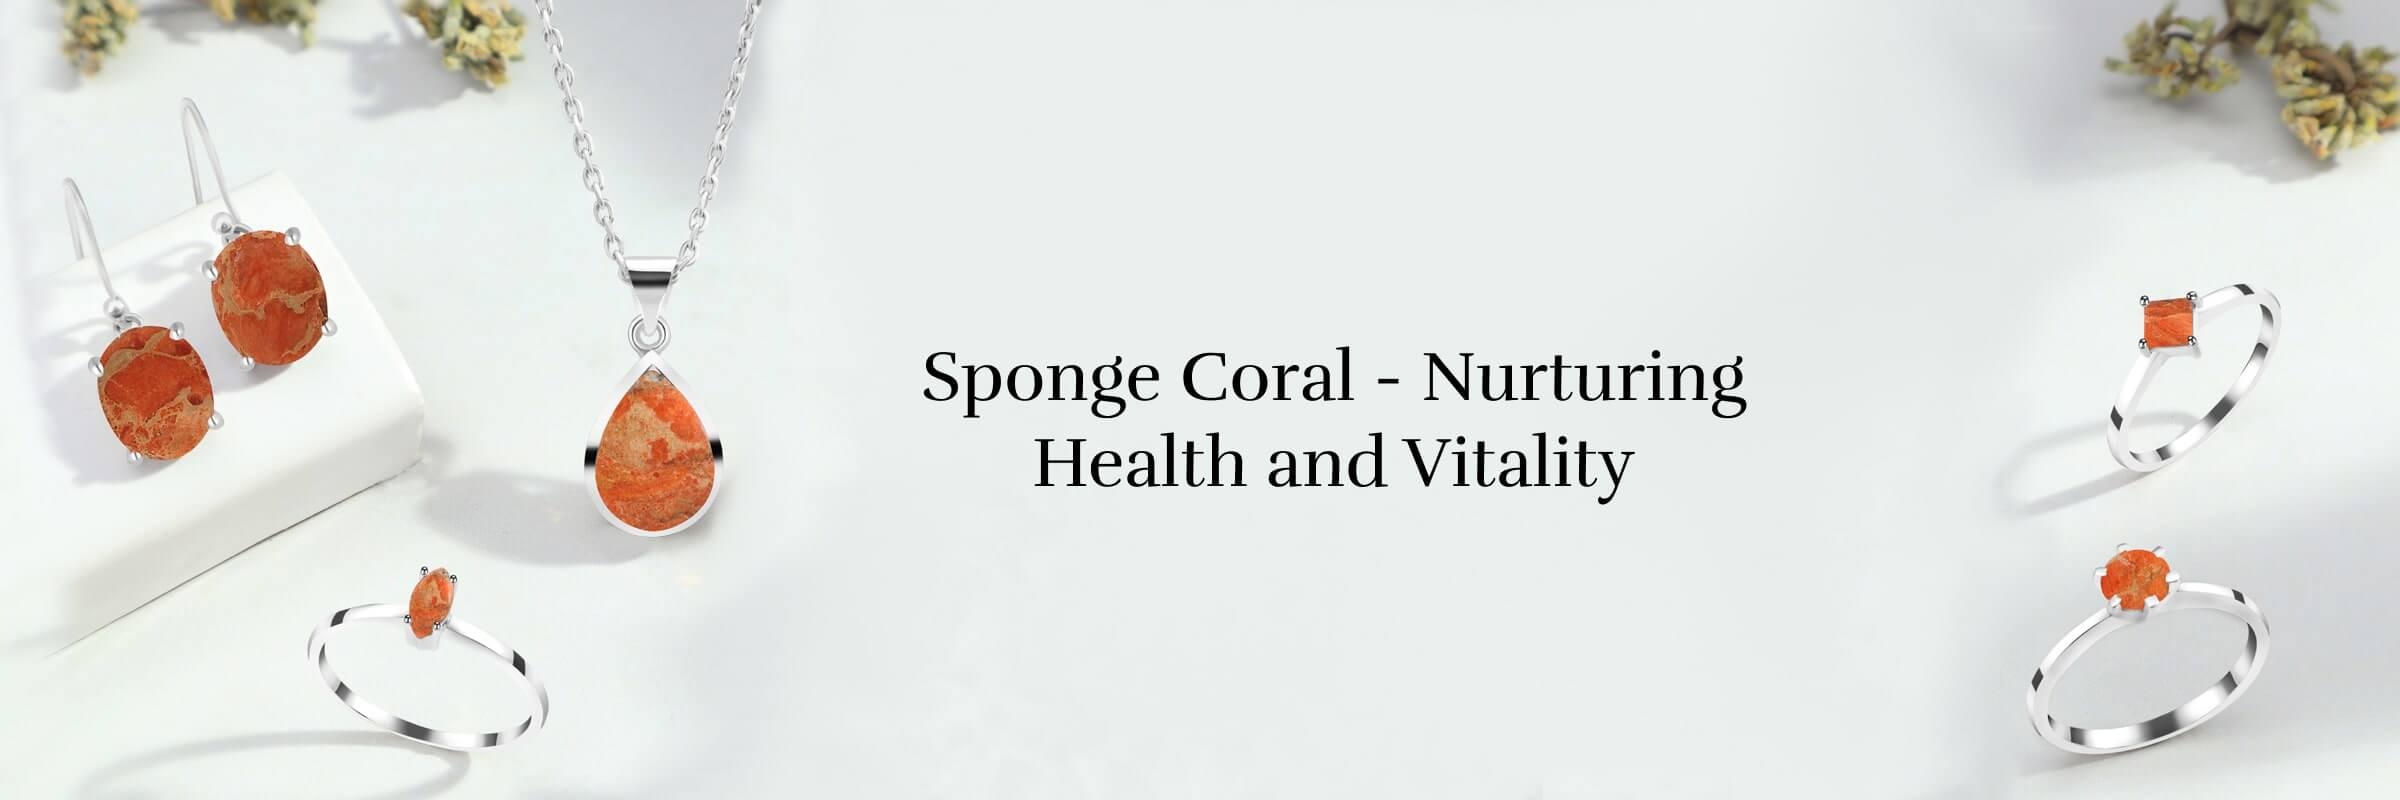 Health benefits of Sponge Coral